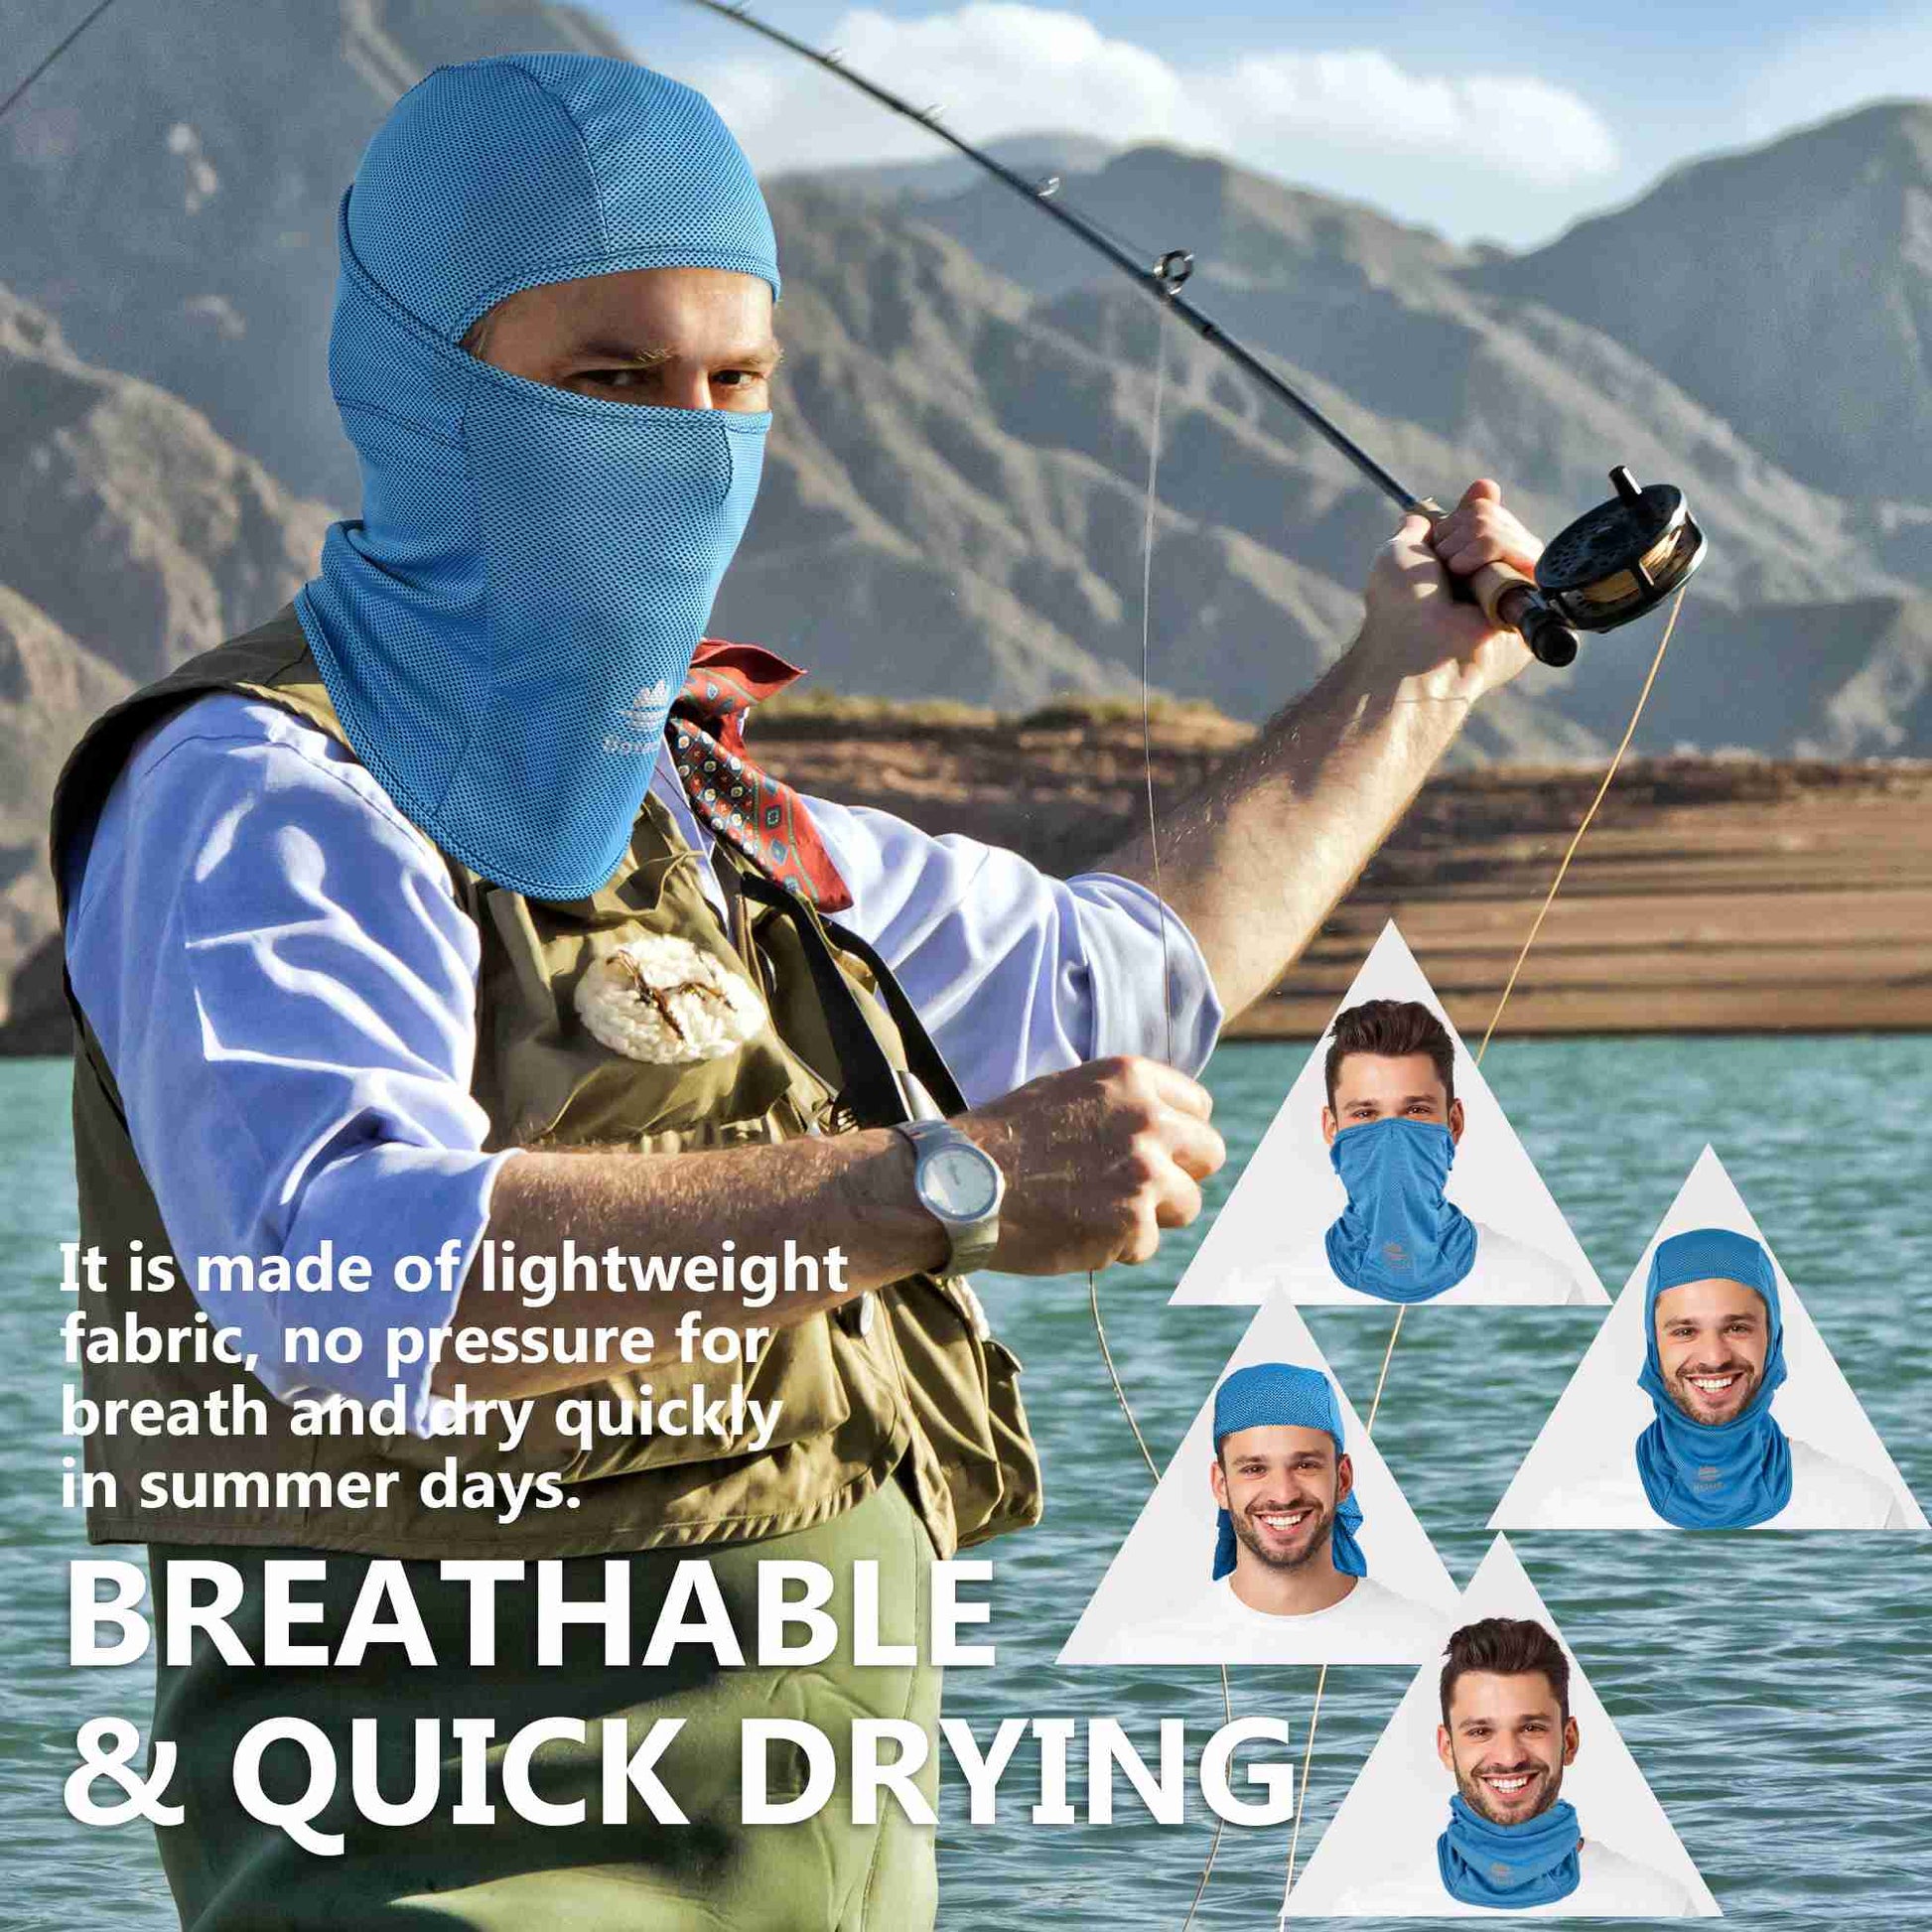 Balaclava Full Face Mask Hiking Fishing Face Cover Hood Head Cover Face  Shield